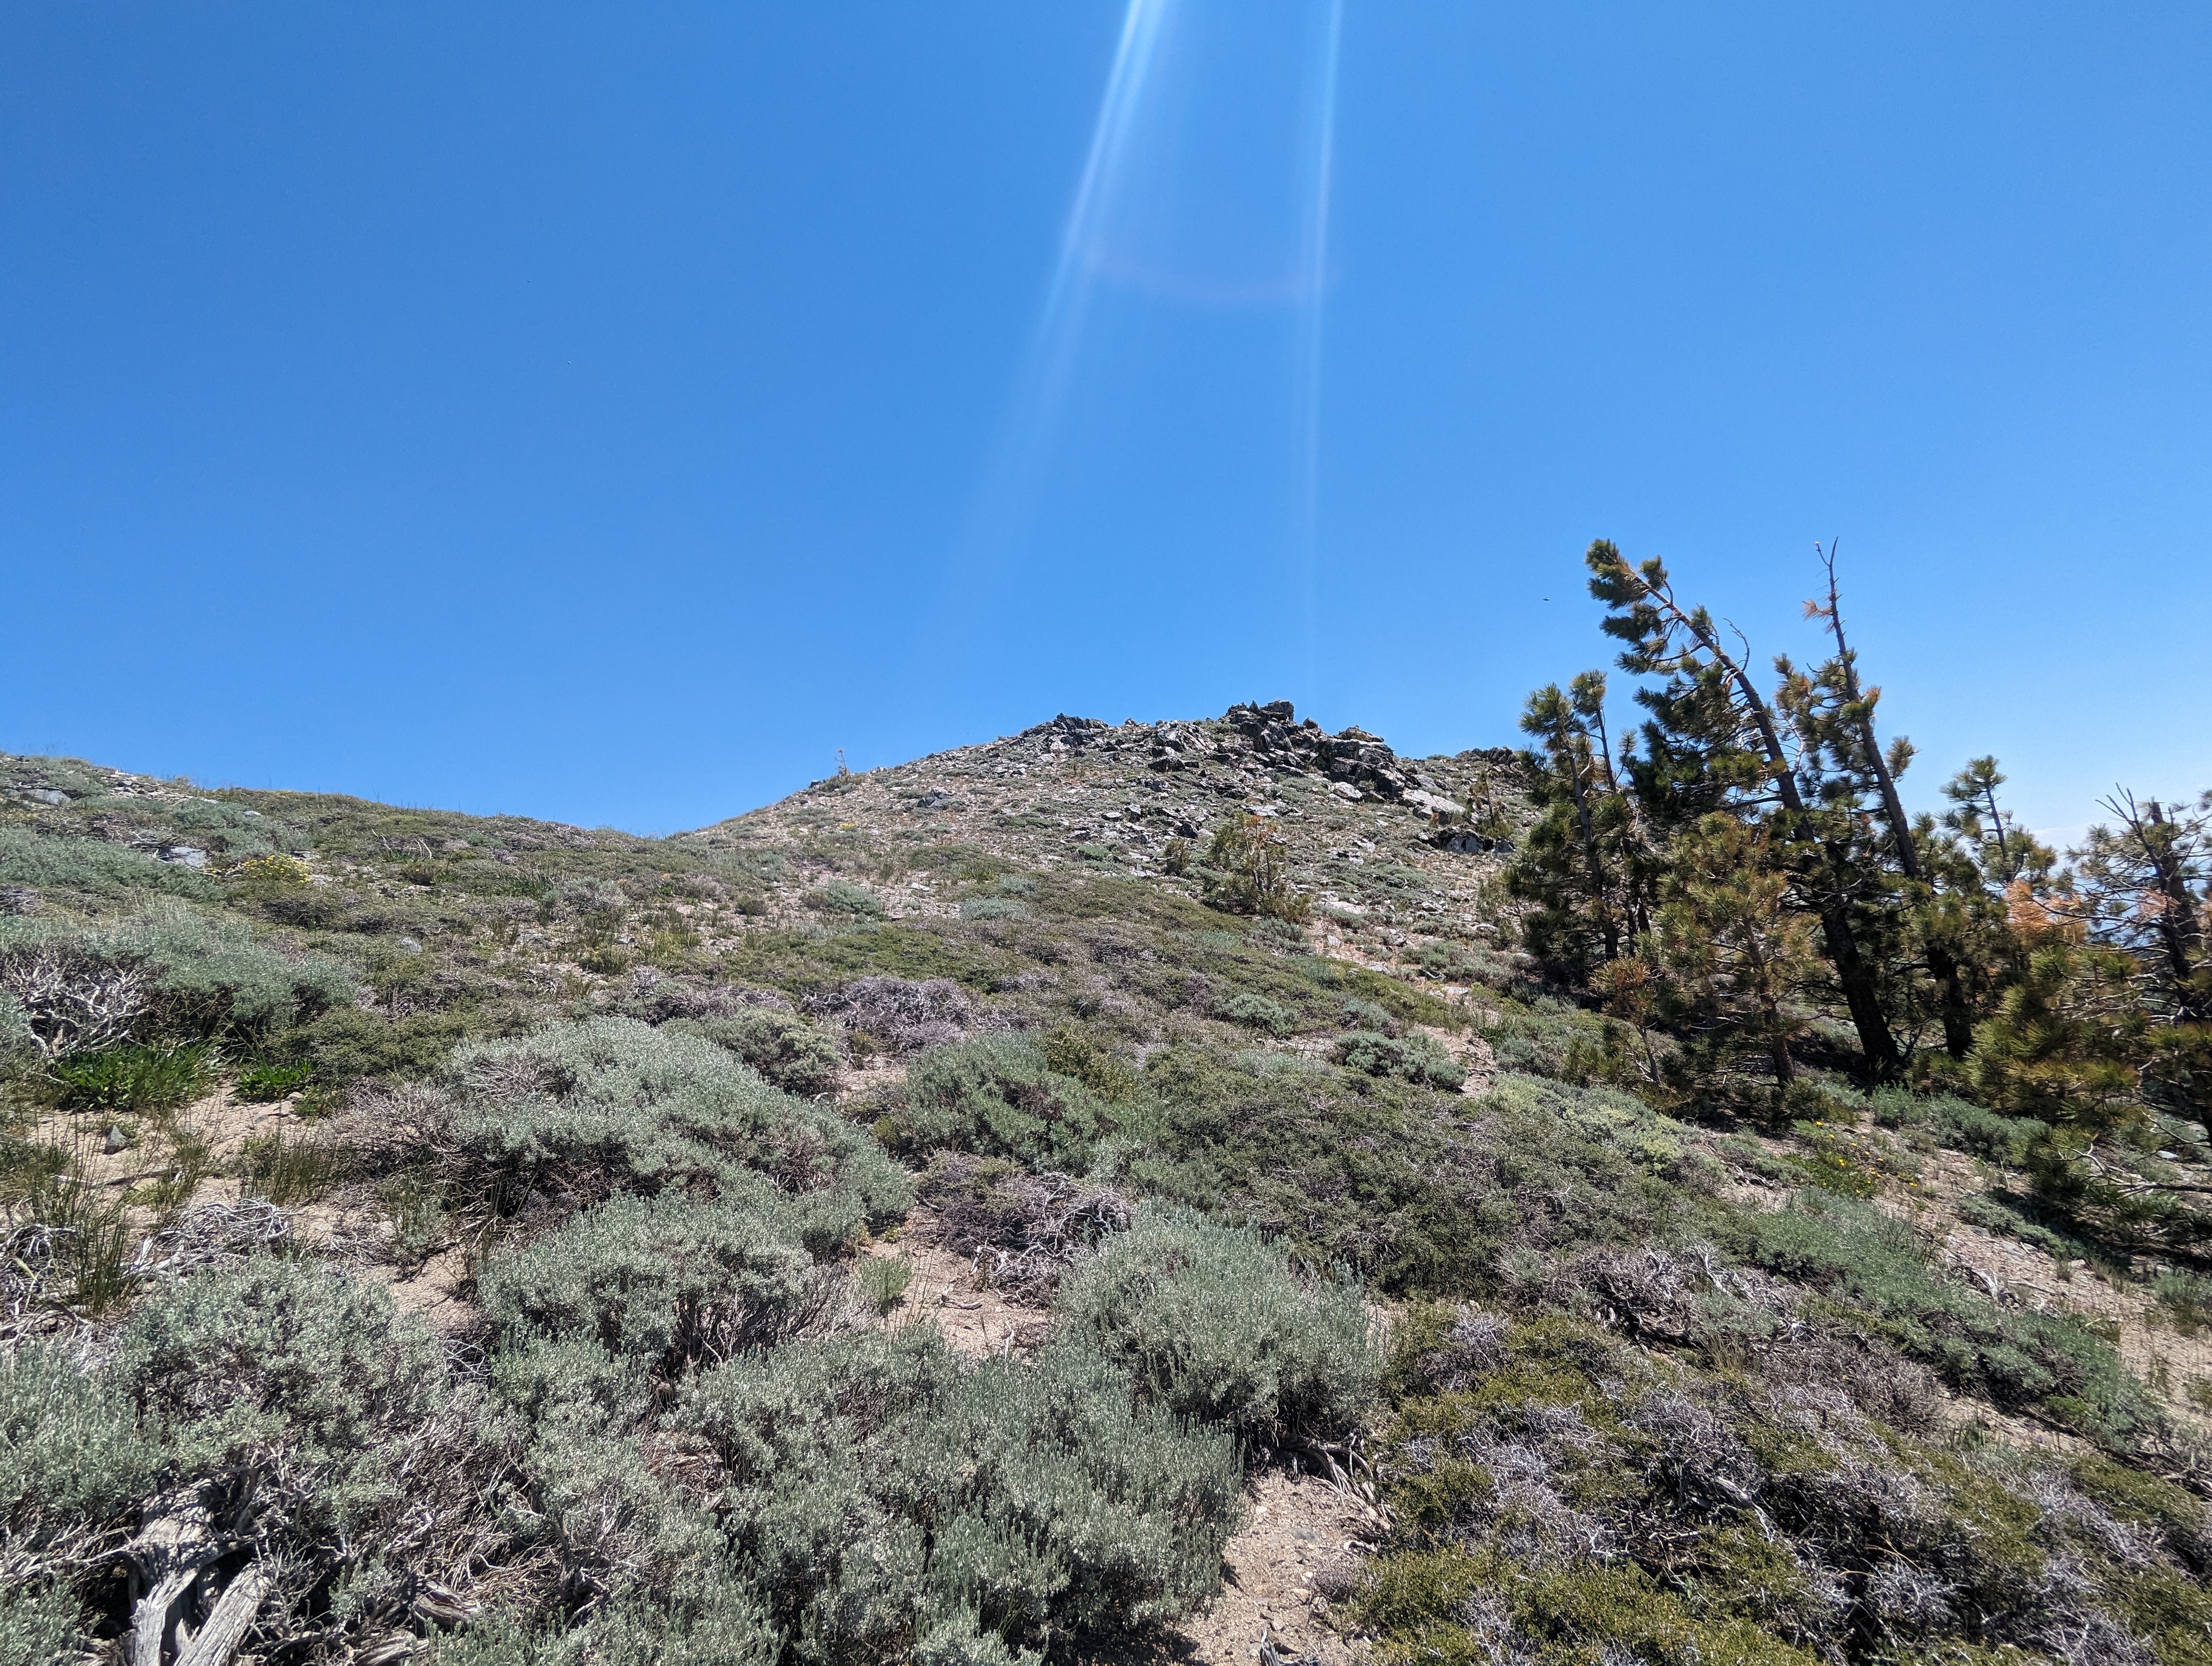 Nearing the summit of Duane Bliss Peak